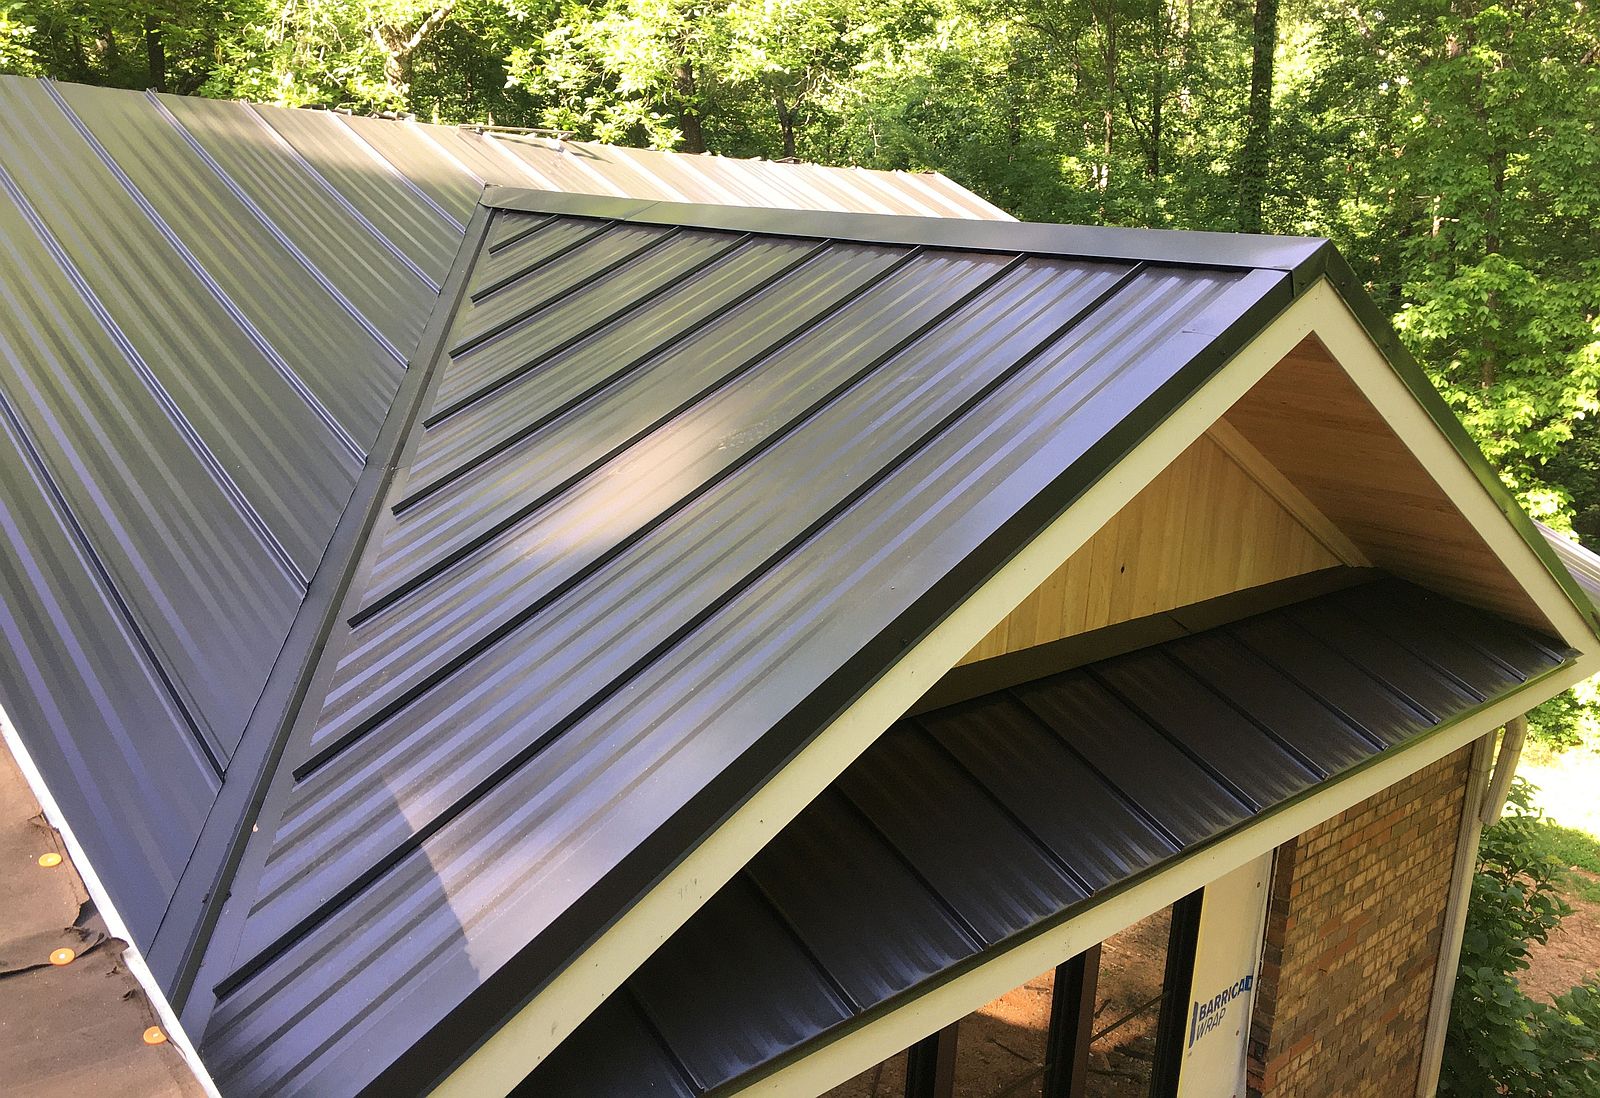 standing-seam-metal-roofing-panels-woodstock-metal-roofing